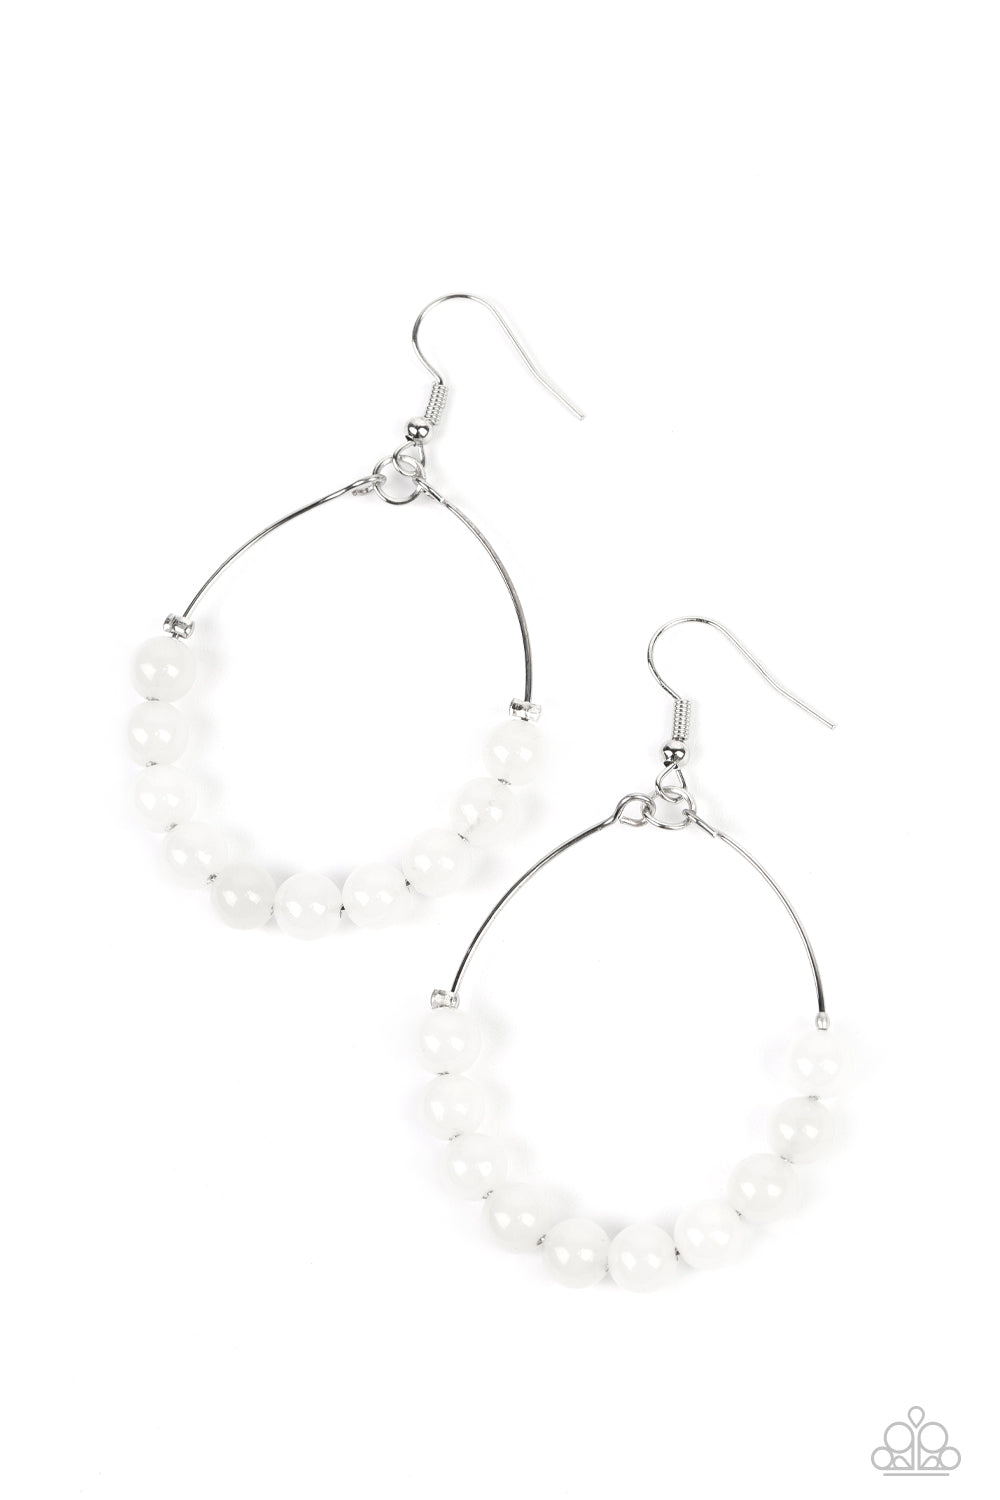 Catch a Breeze - white - Paparazzi earrings